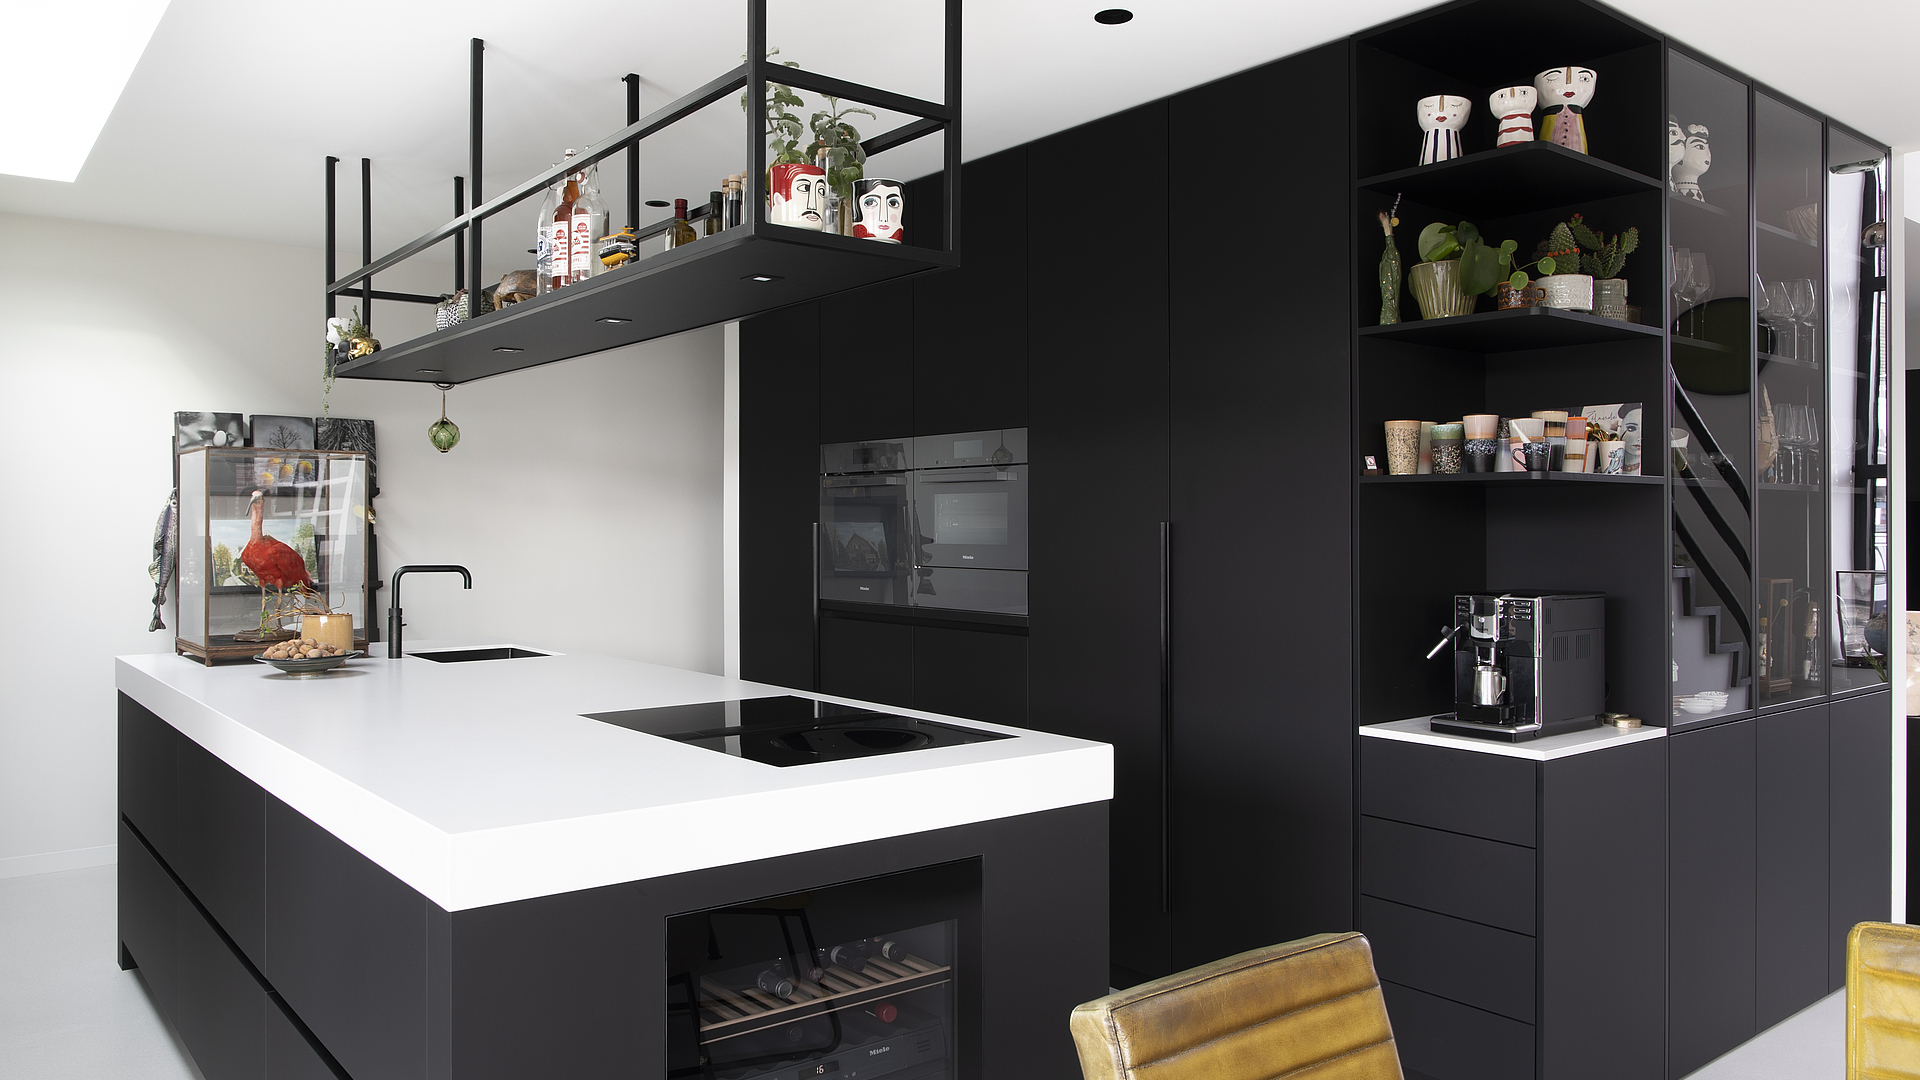 A modern kitchen jungle